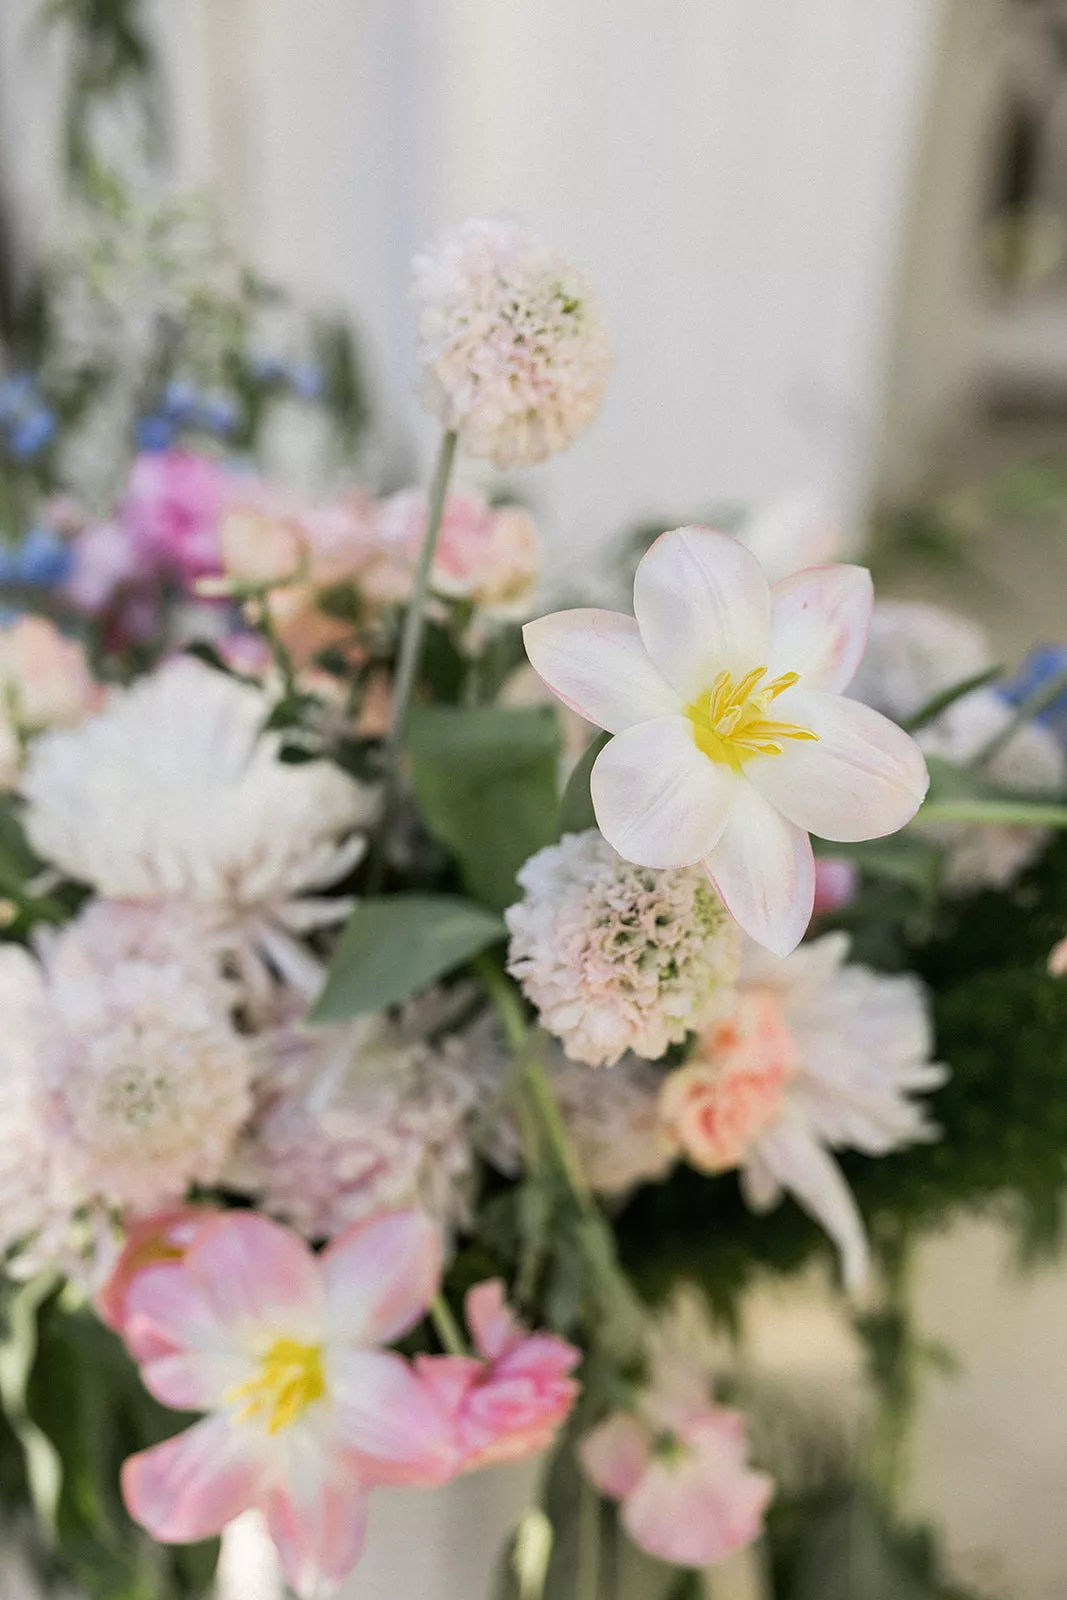 Details of a floral arrangement for a wedding